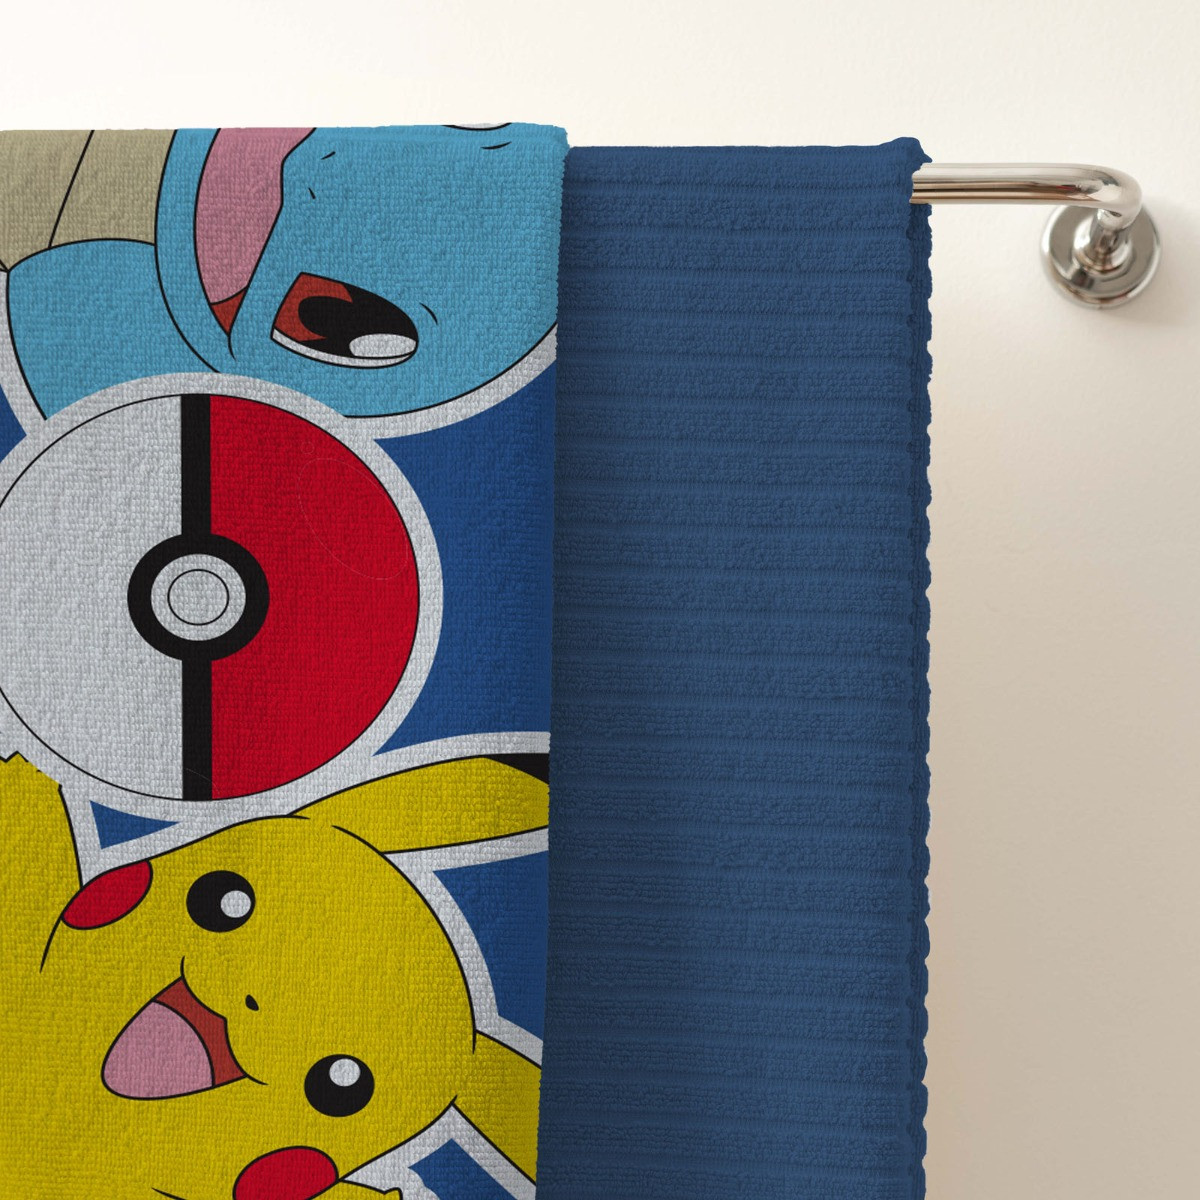 Pokémon Land Beach Towel - Blue>